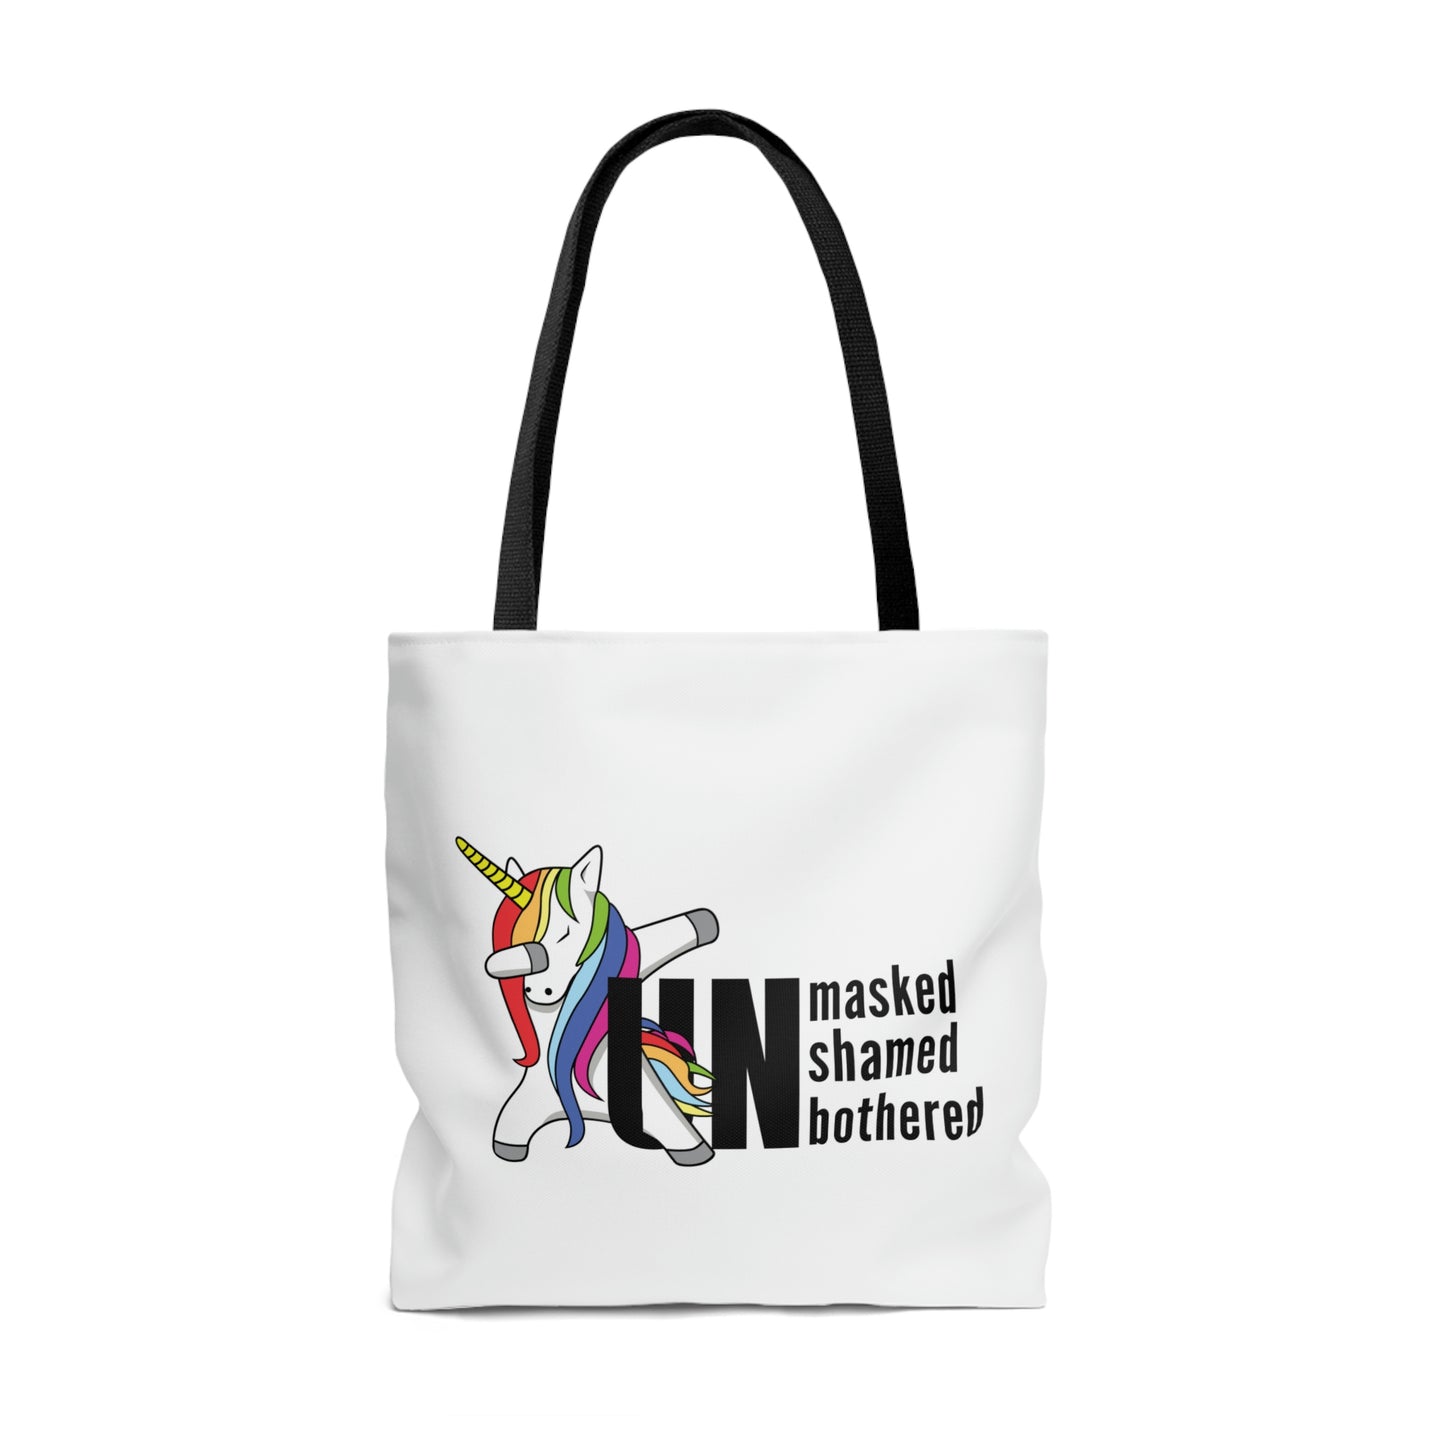 "Unmasked Unshamed Unbothered" Unicorn Tote Bag in 3 sizes